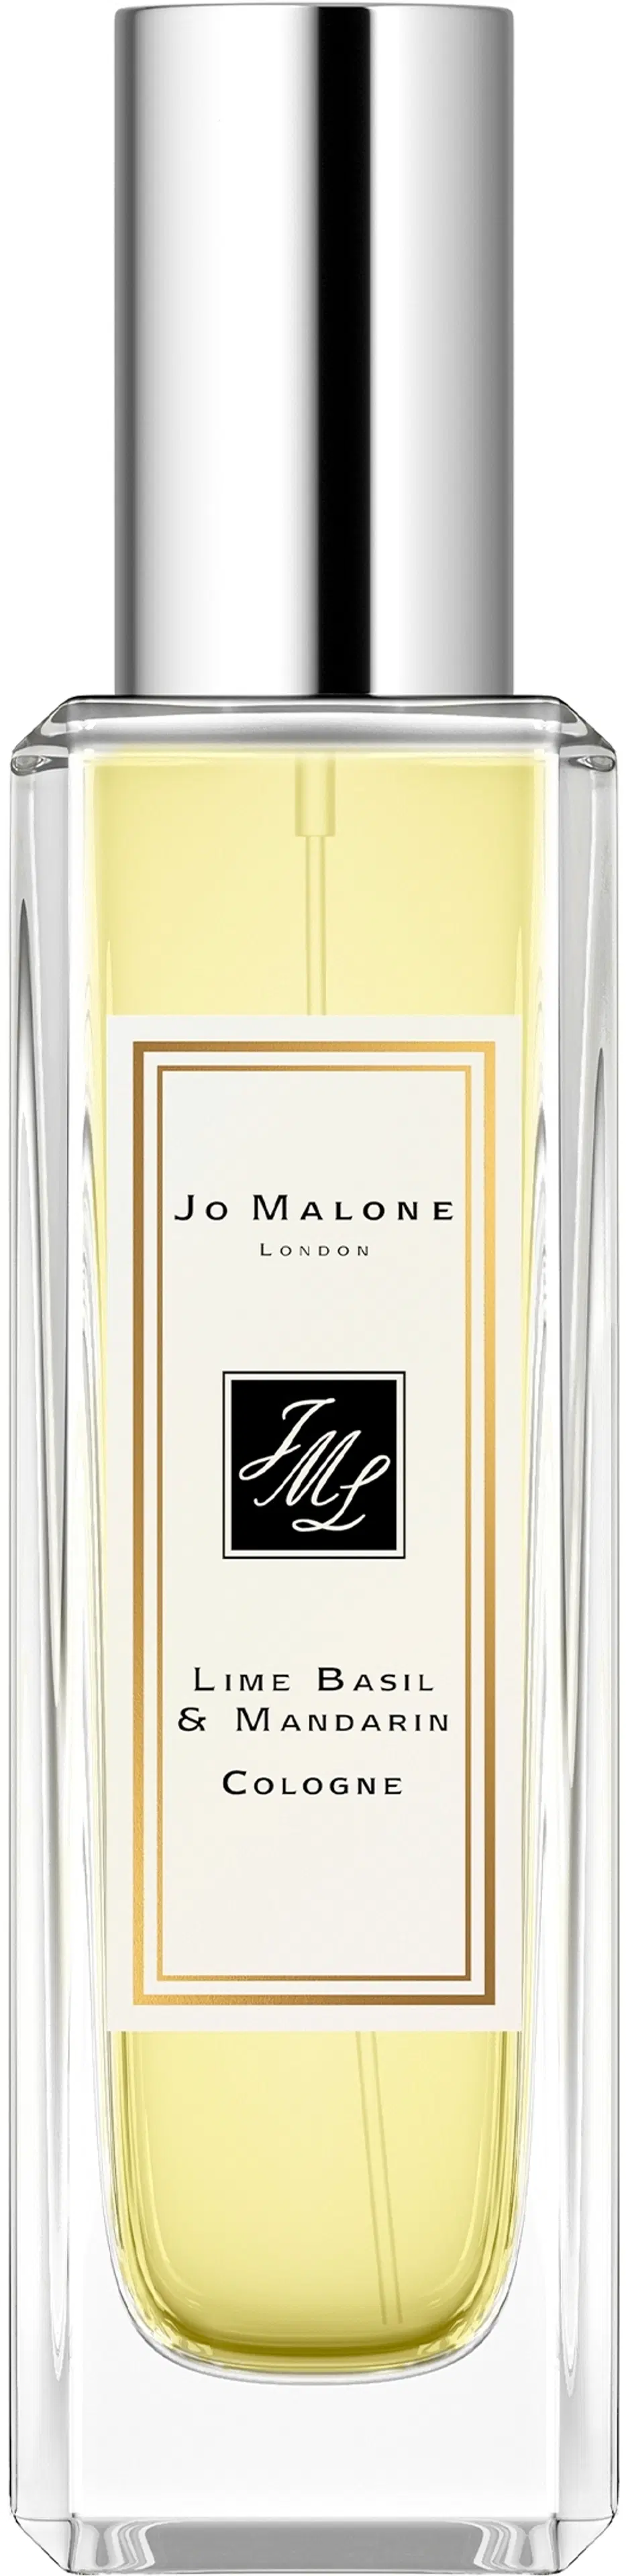 Jo Malone London Lime Basil & Mandarin Cologne EdT tuoksu 30 ml